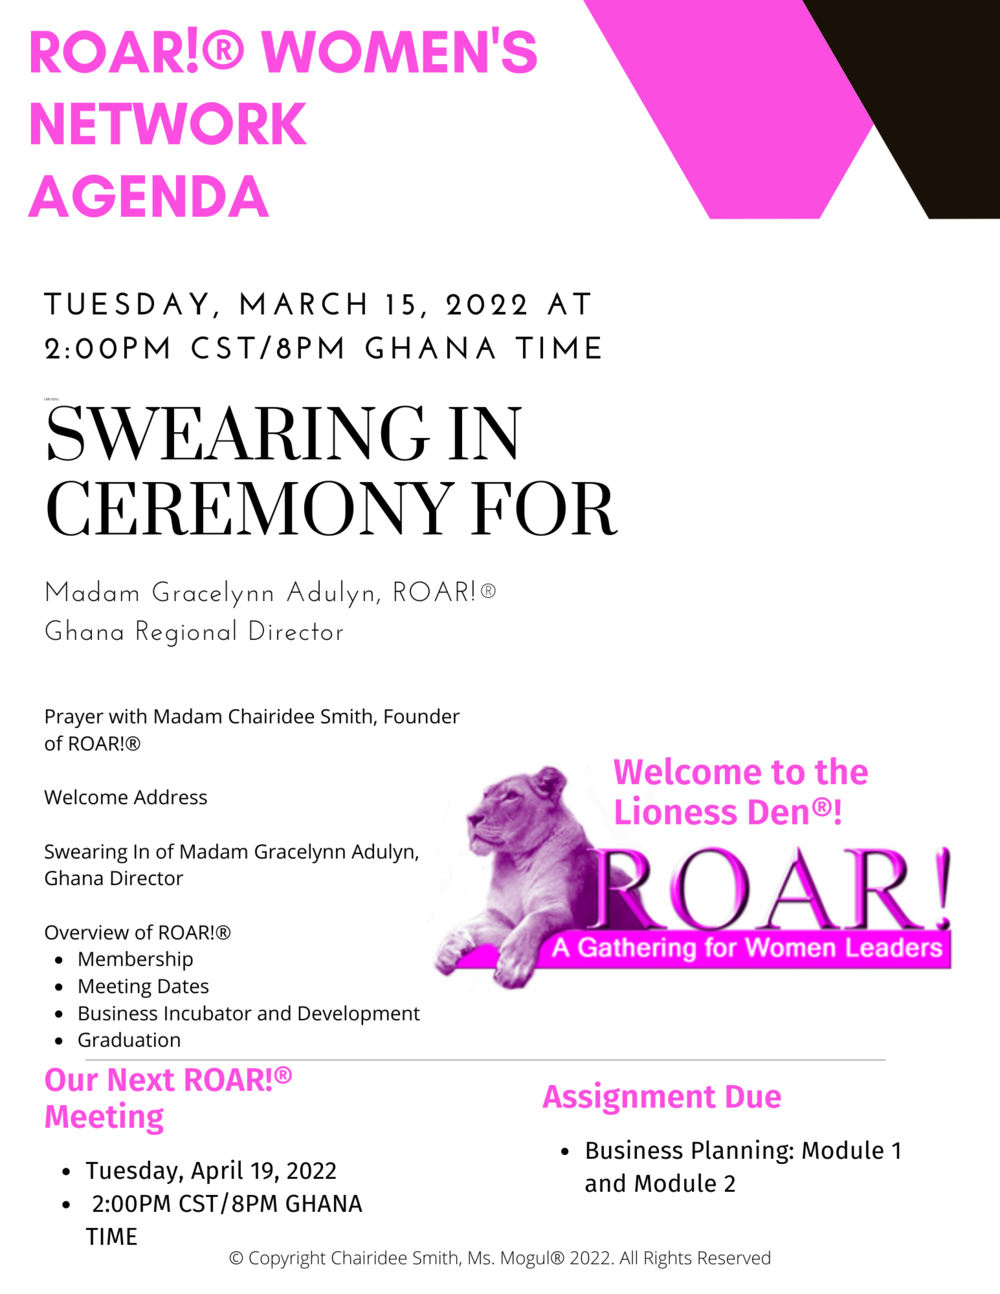 ROAR!® Women's Network Meeting Agenda.png